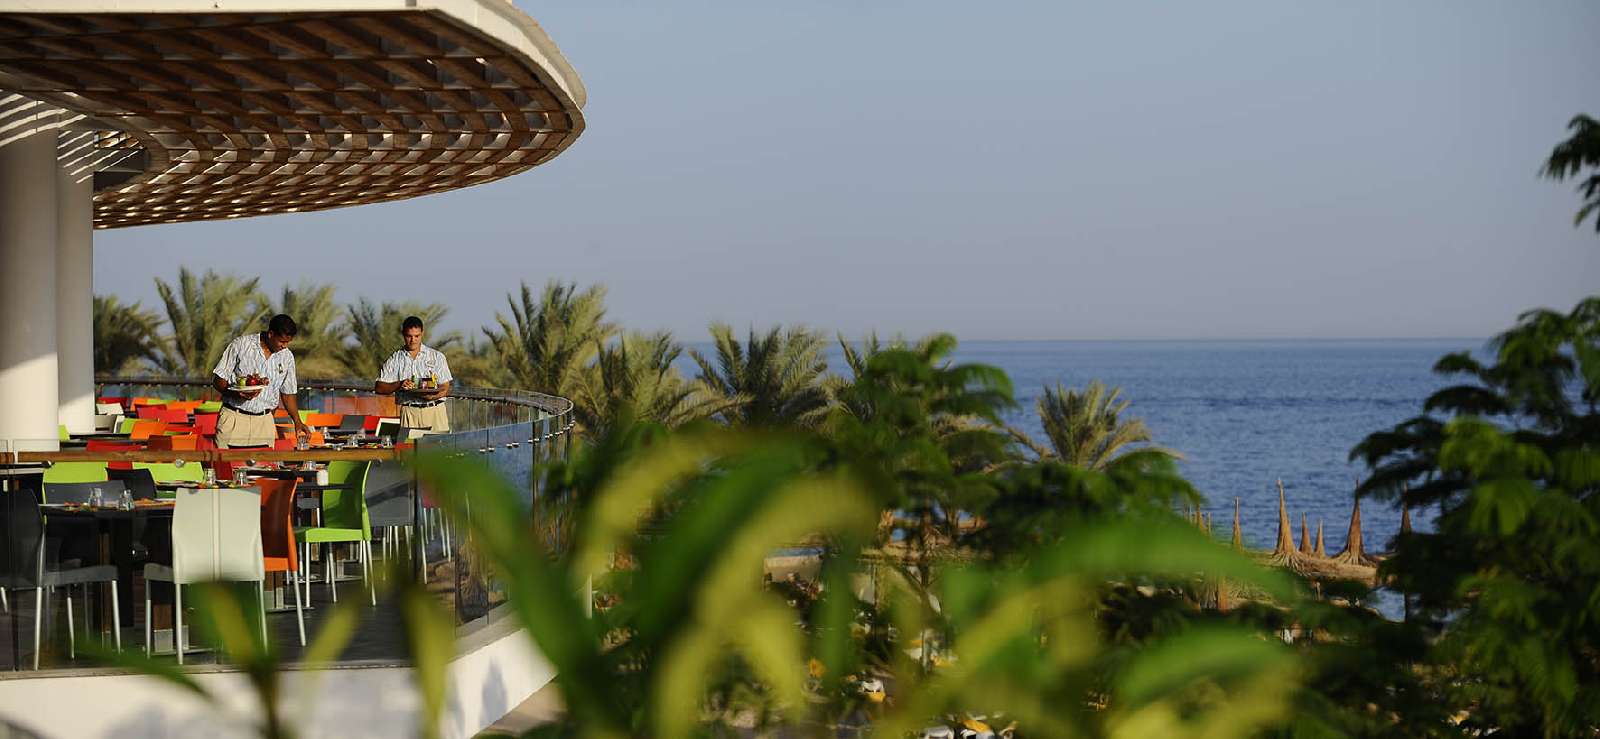 Sharm El Sheikh – Reef Oasis Blue Bay Resort  reef-oasis-blue-bay-resort-terrazza-ristorante.jpg